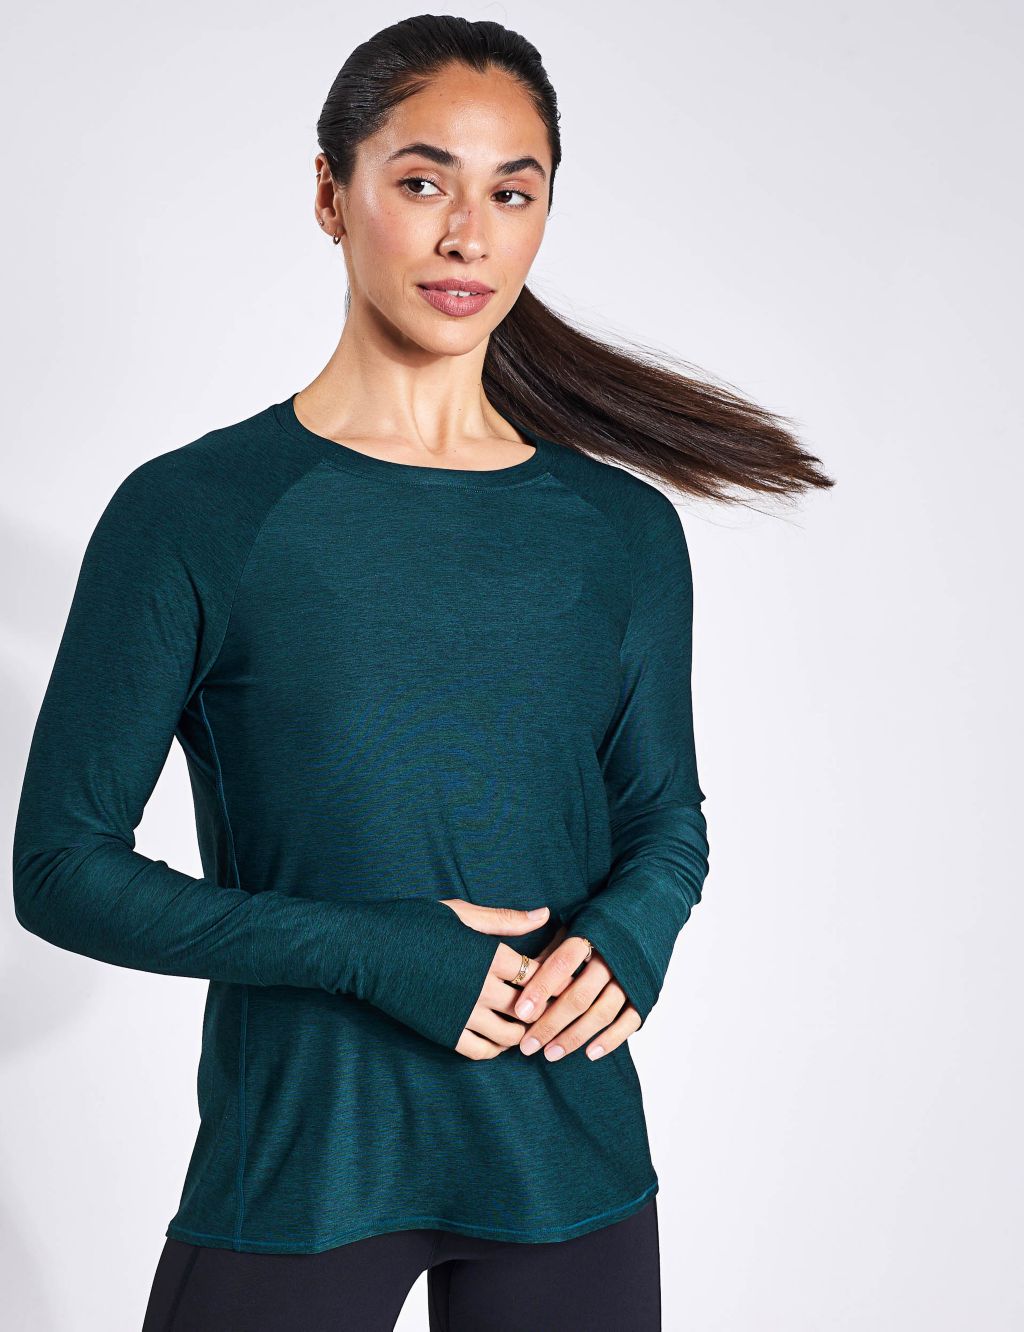 Women's Long Sleeve Sports Tops & T-Shirts